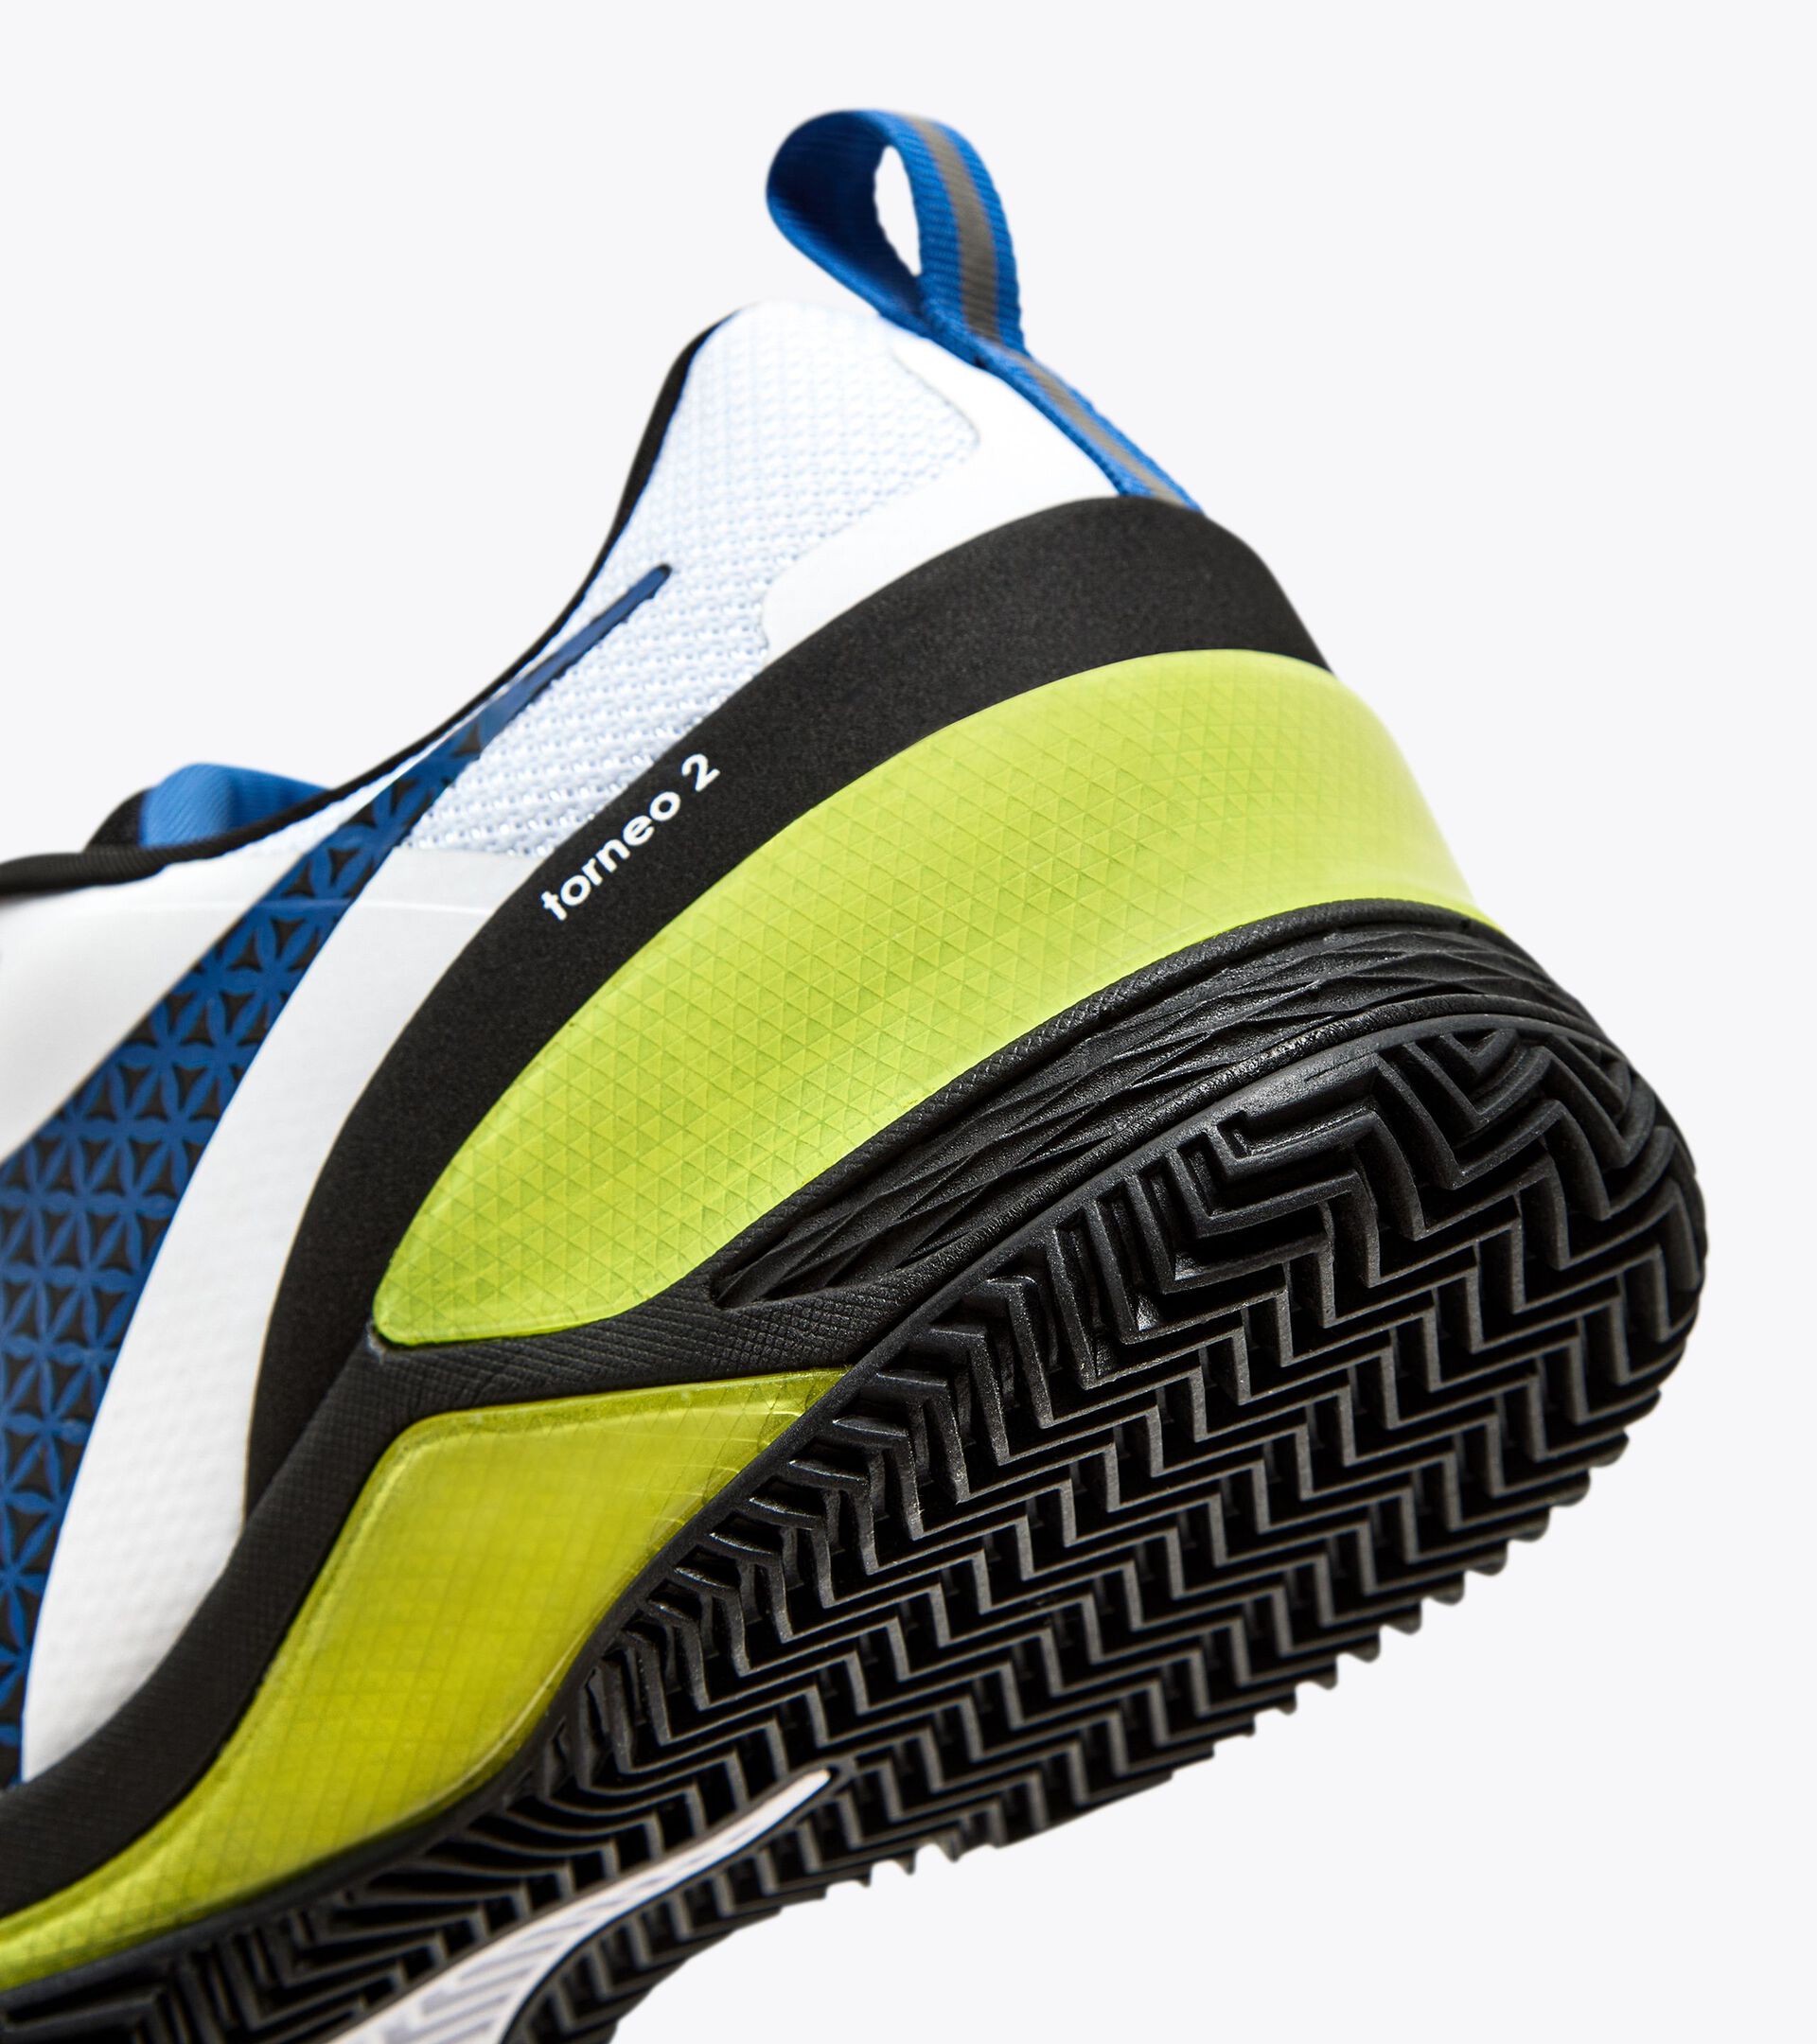 Tennis shoes for clay court - Men BLUSHIELD TORNEO 2 CLAY WHITE/DEJA VU BLUE/BLACK - Diadora